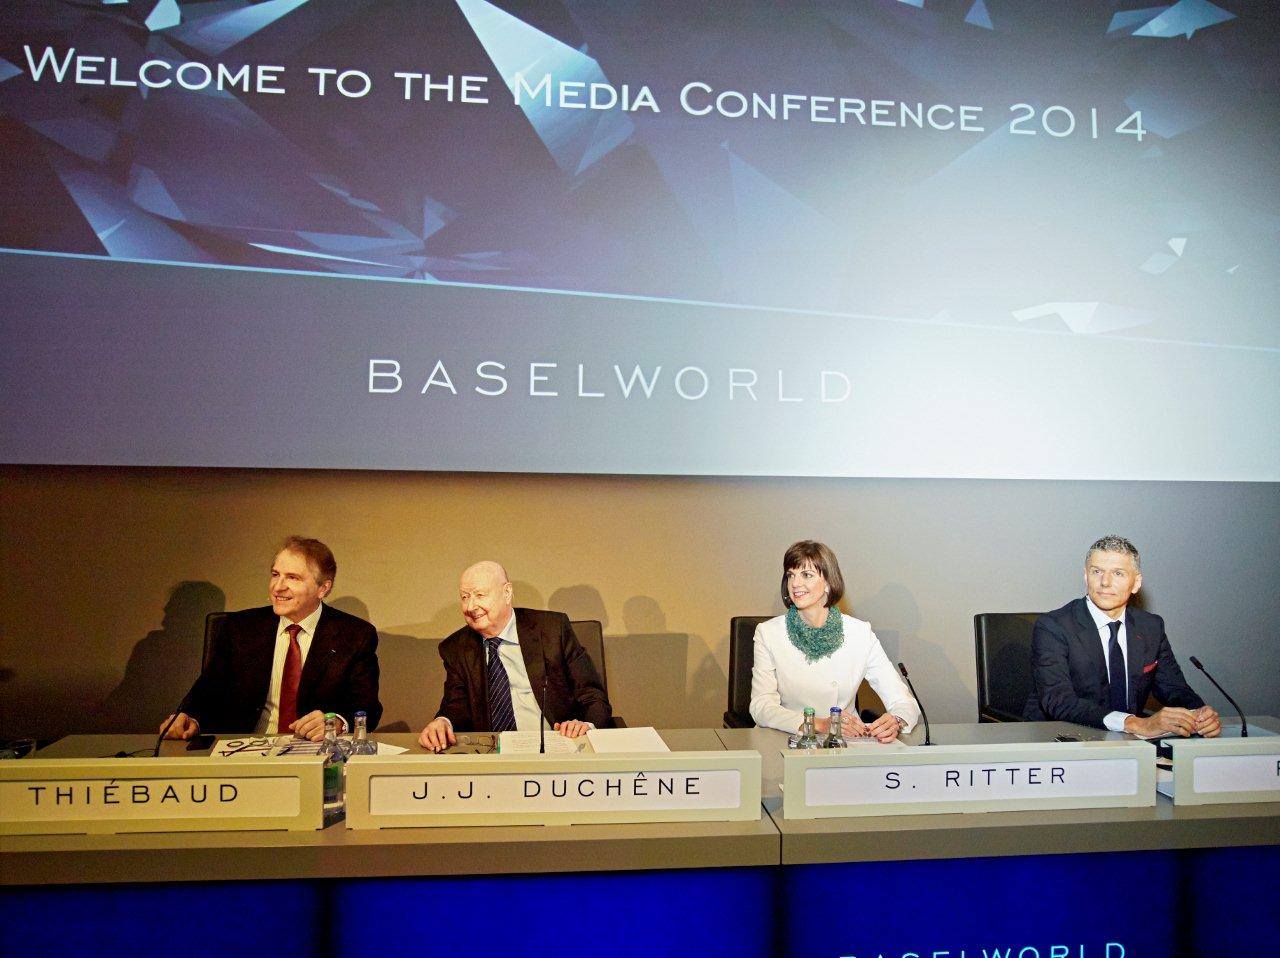 BaselWorld 2014 Begins